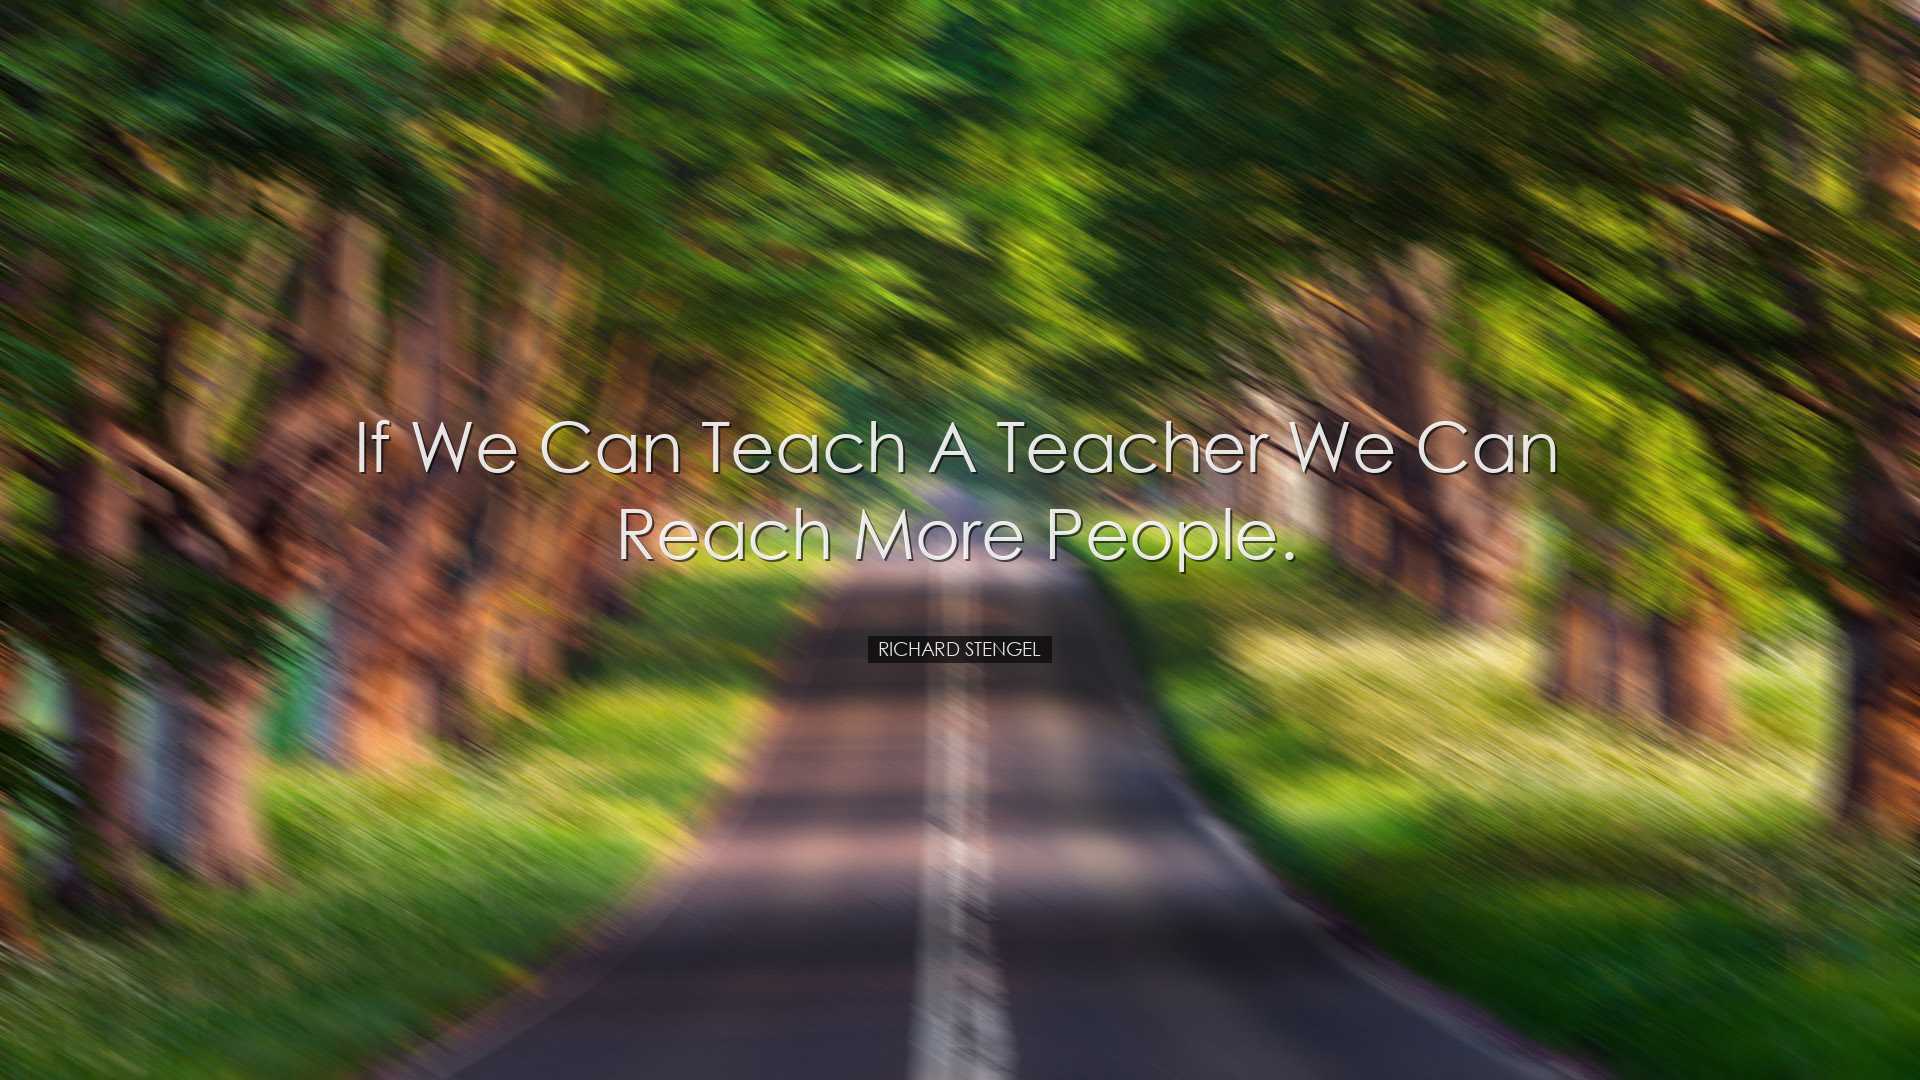 If we can teach a teacher we can reach more people. - Richard Sten